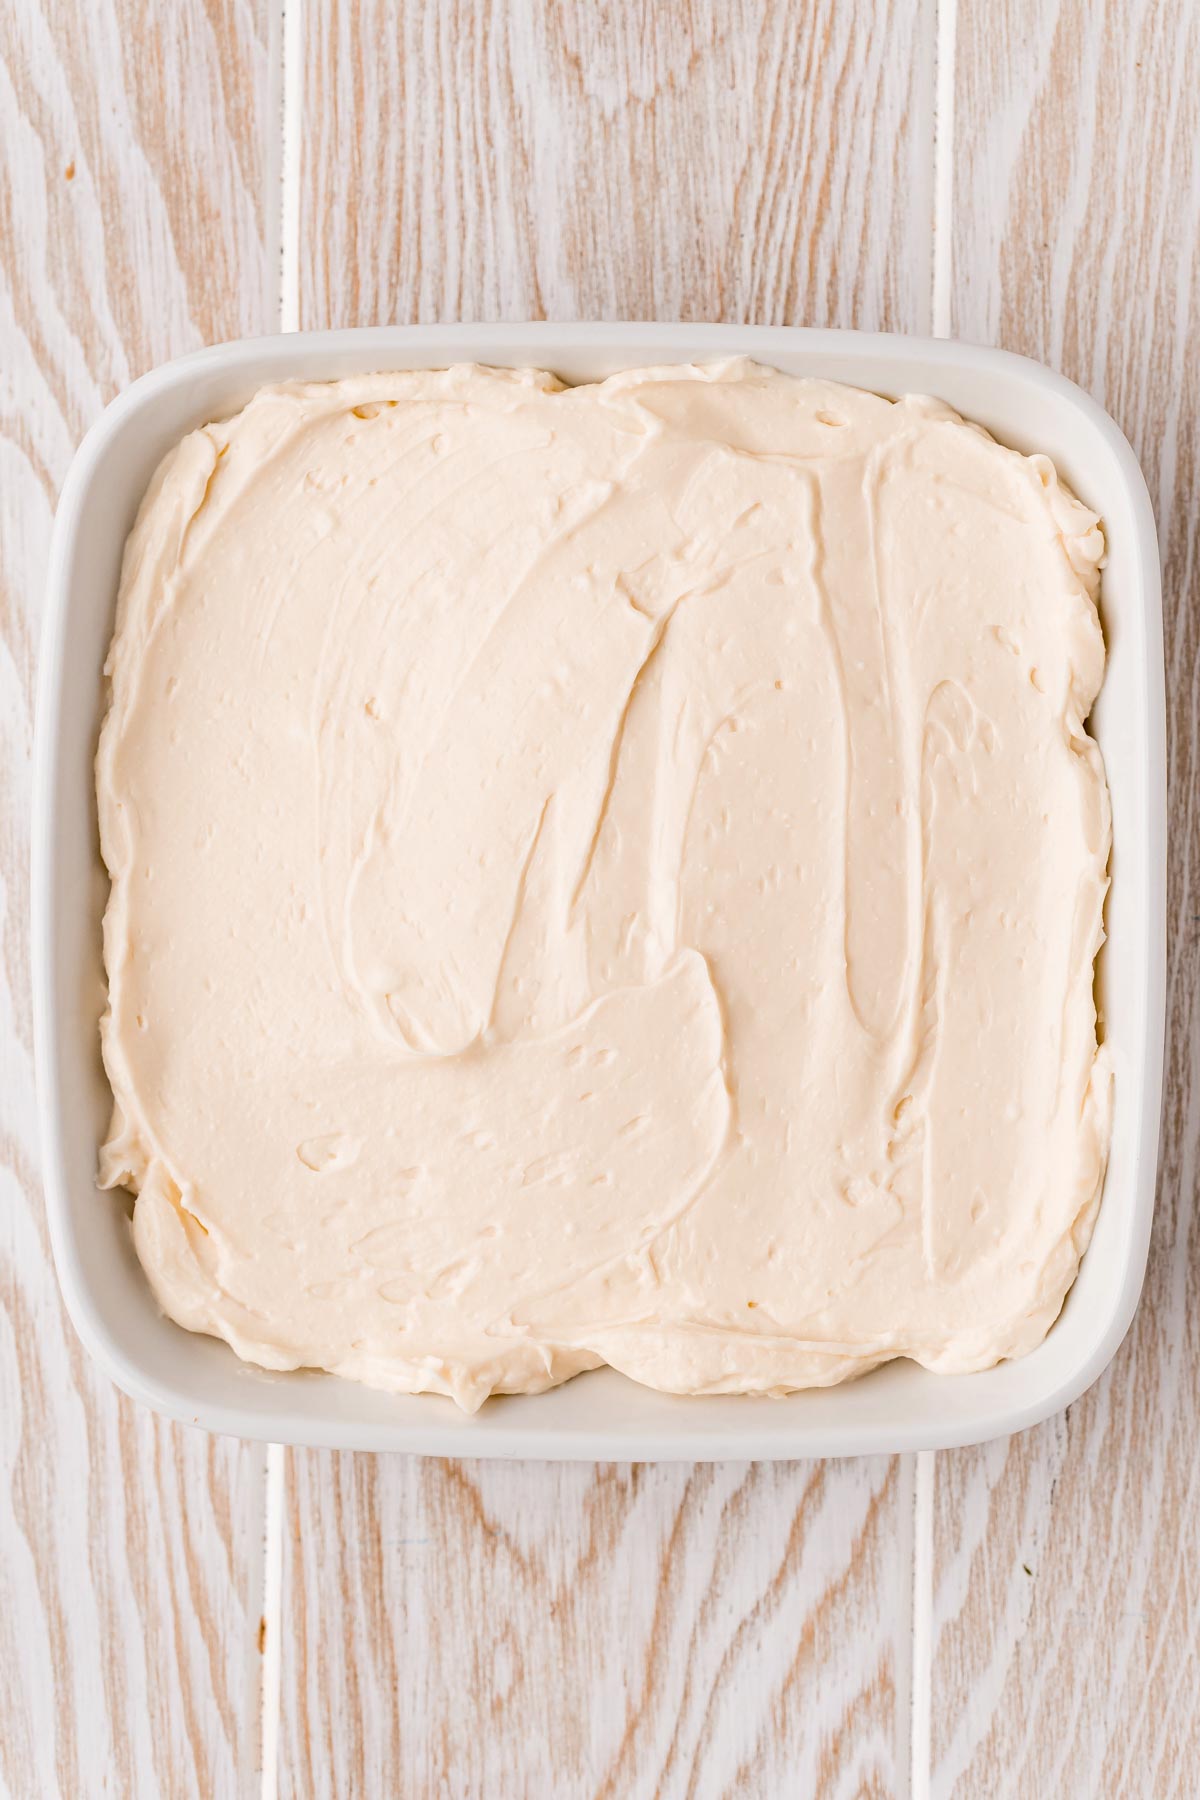 cream cheese dip in a white square dish